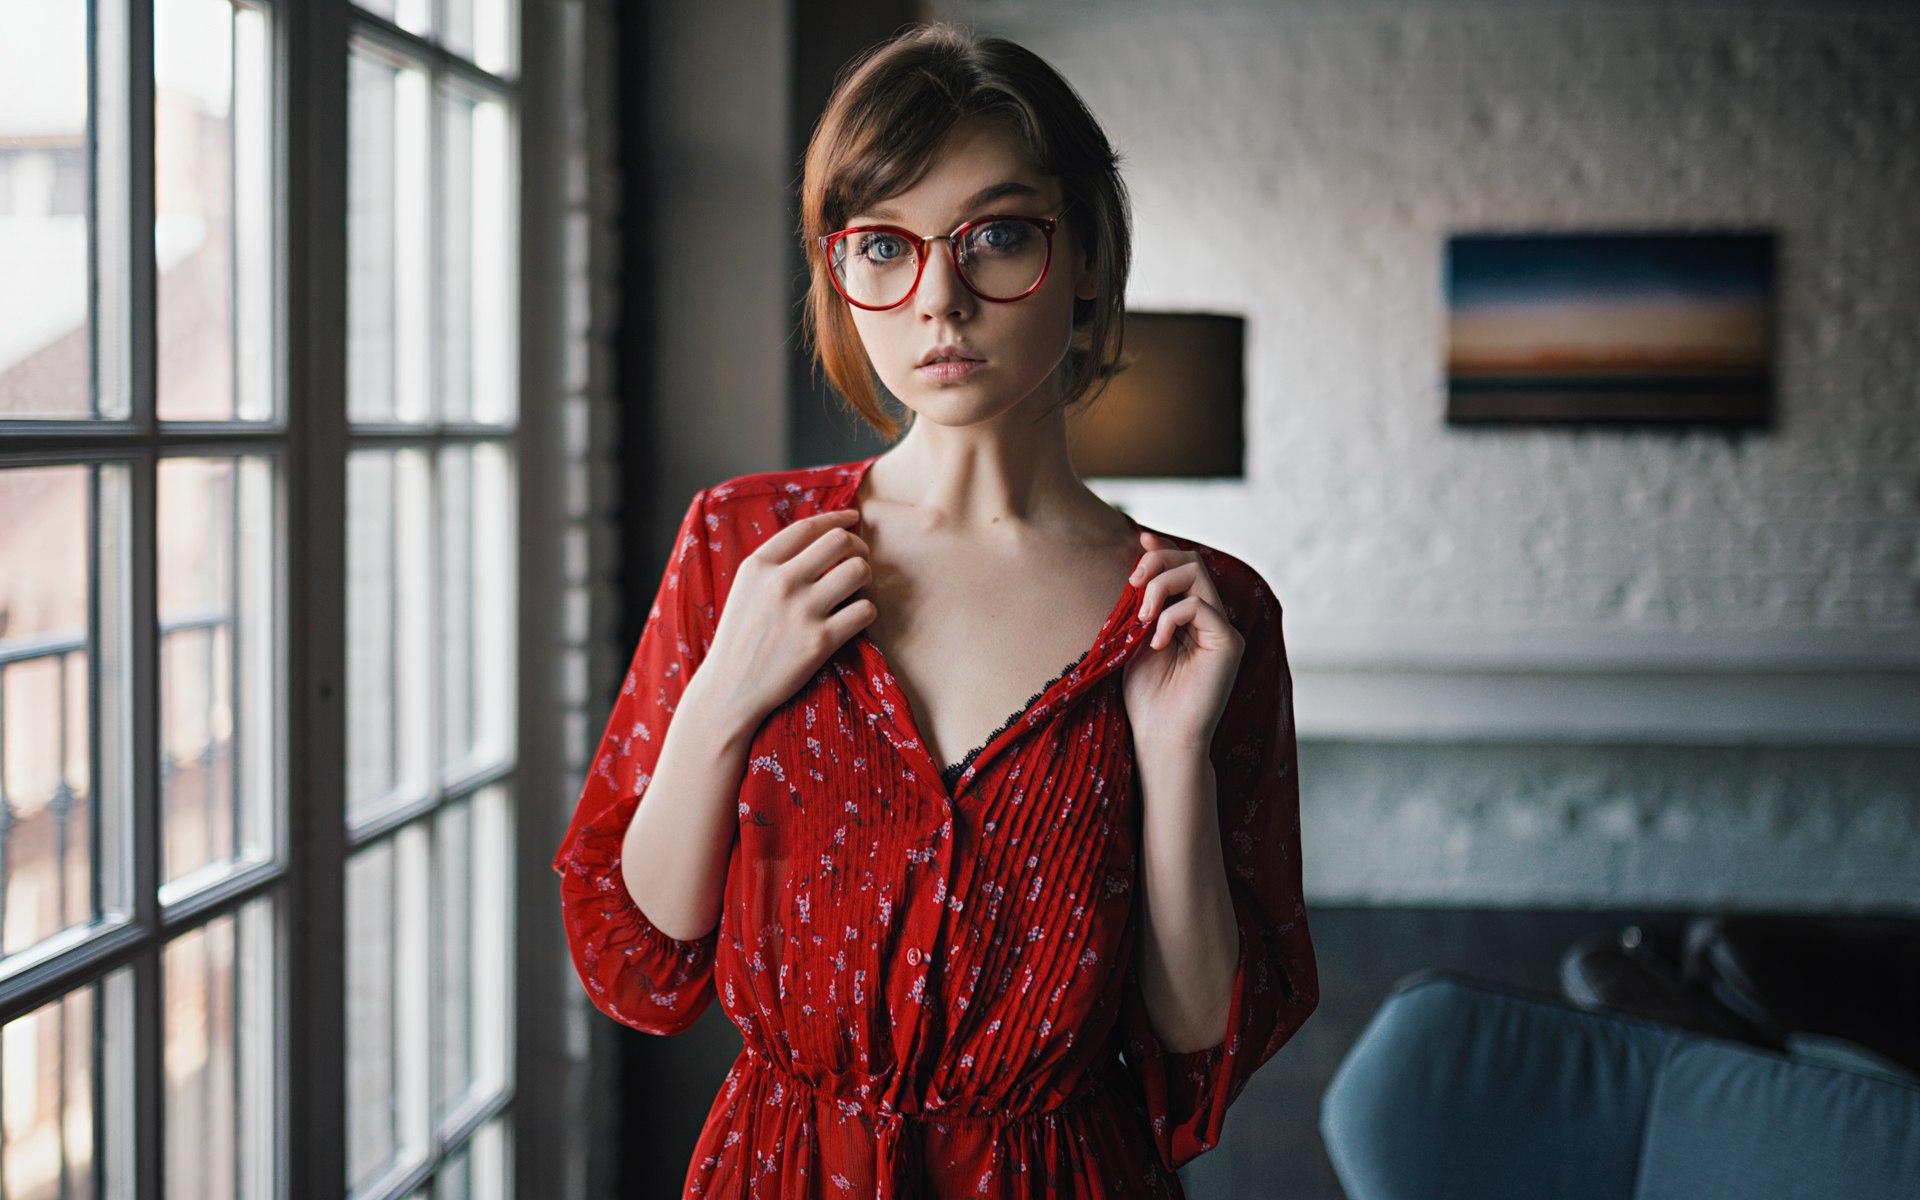 Olya Pushkina Sergey Zhirnov Women Model Women With Glasses Dress Red Dress Looking At Viewer Women  1920x1200